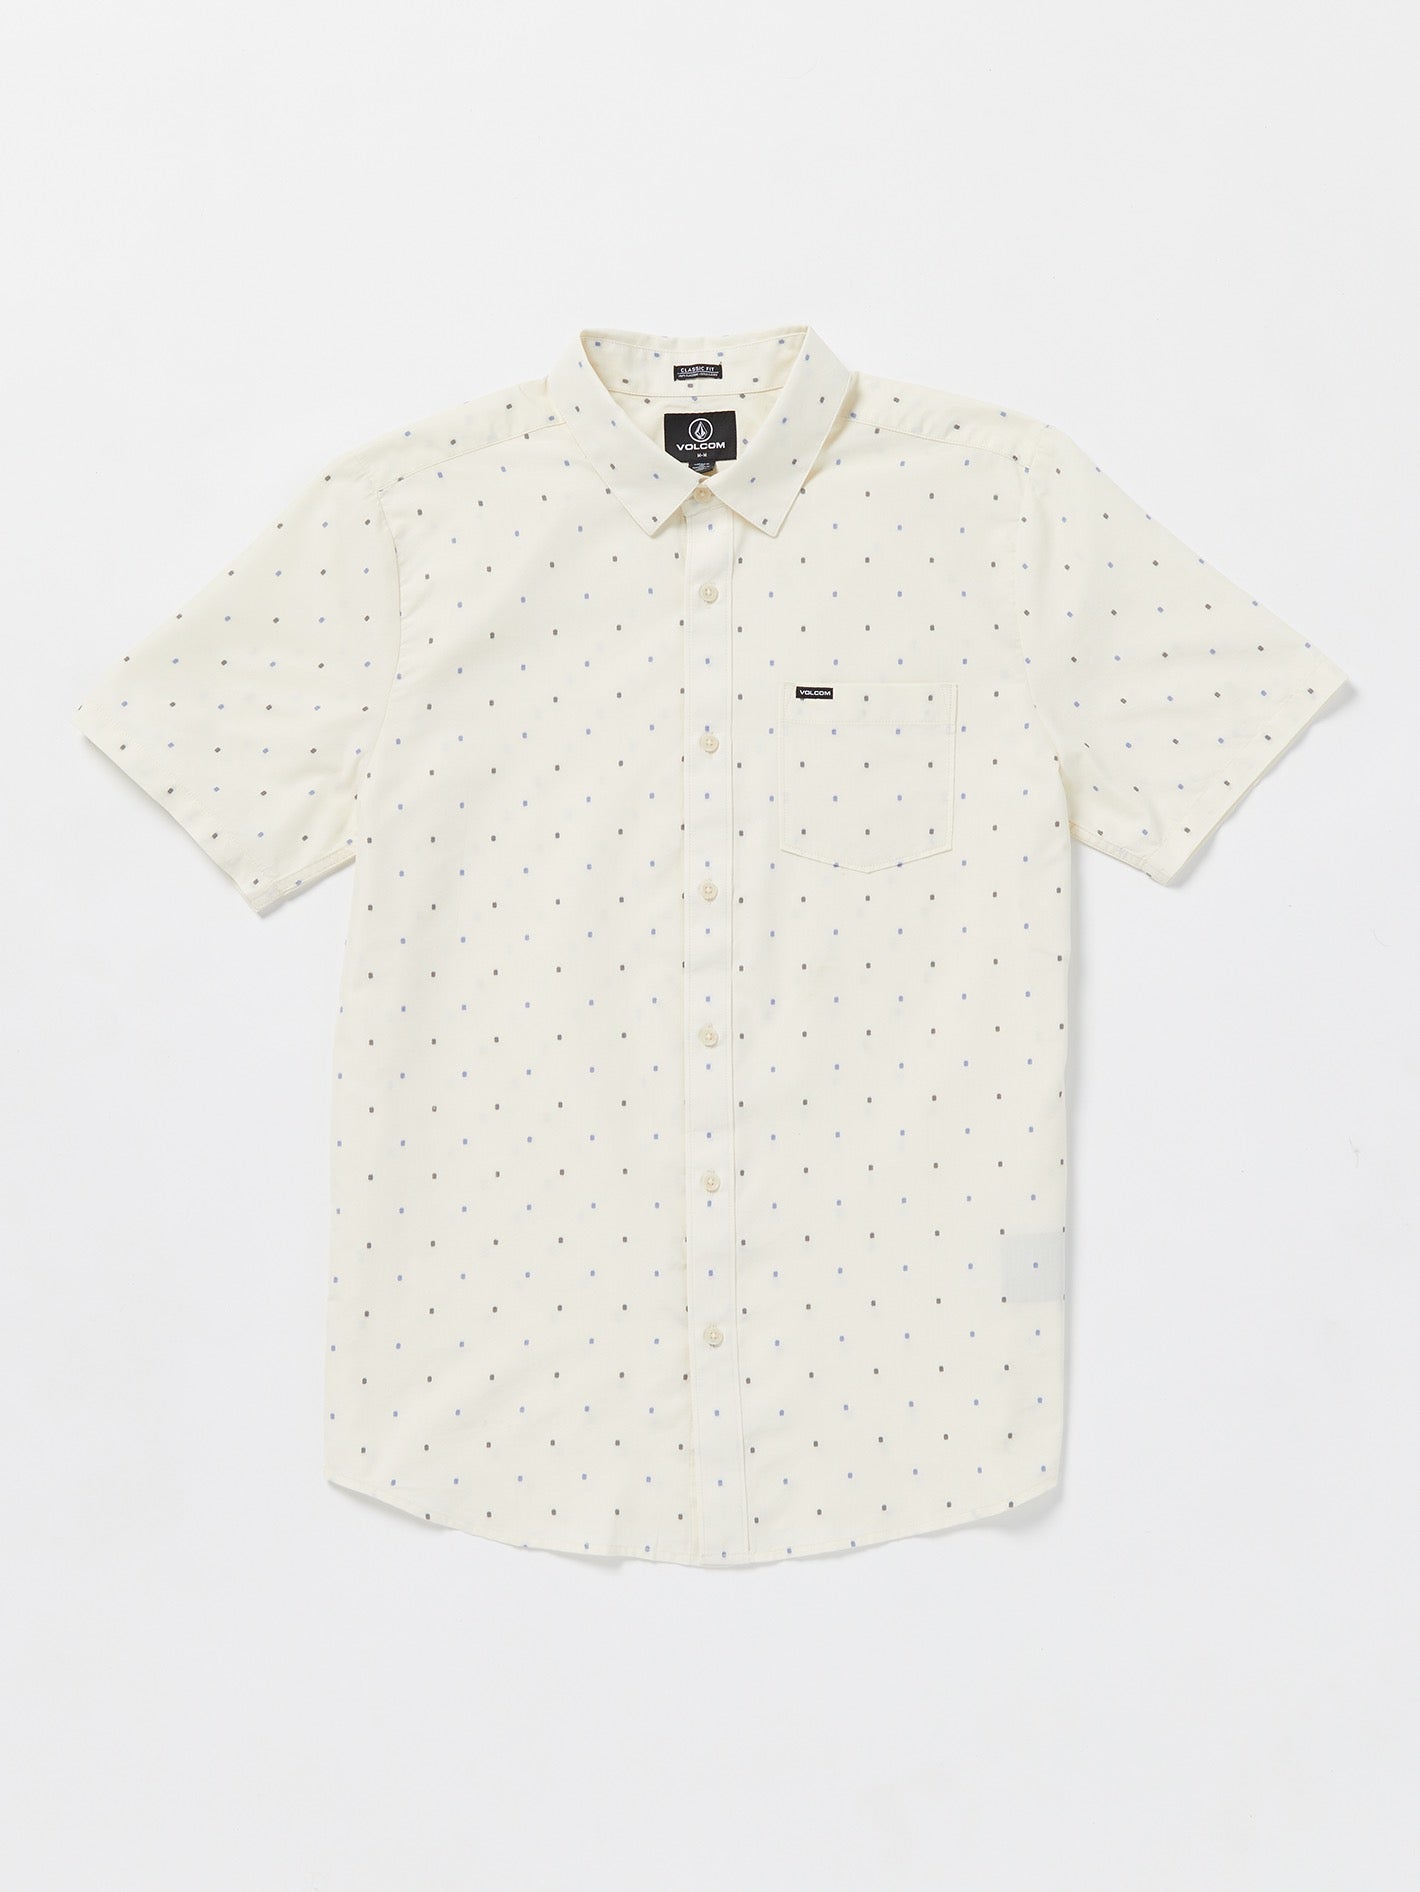 Aueoeo Short Sleeve Shirts for Men Fashion Cotton Linen Shirt